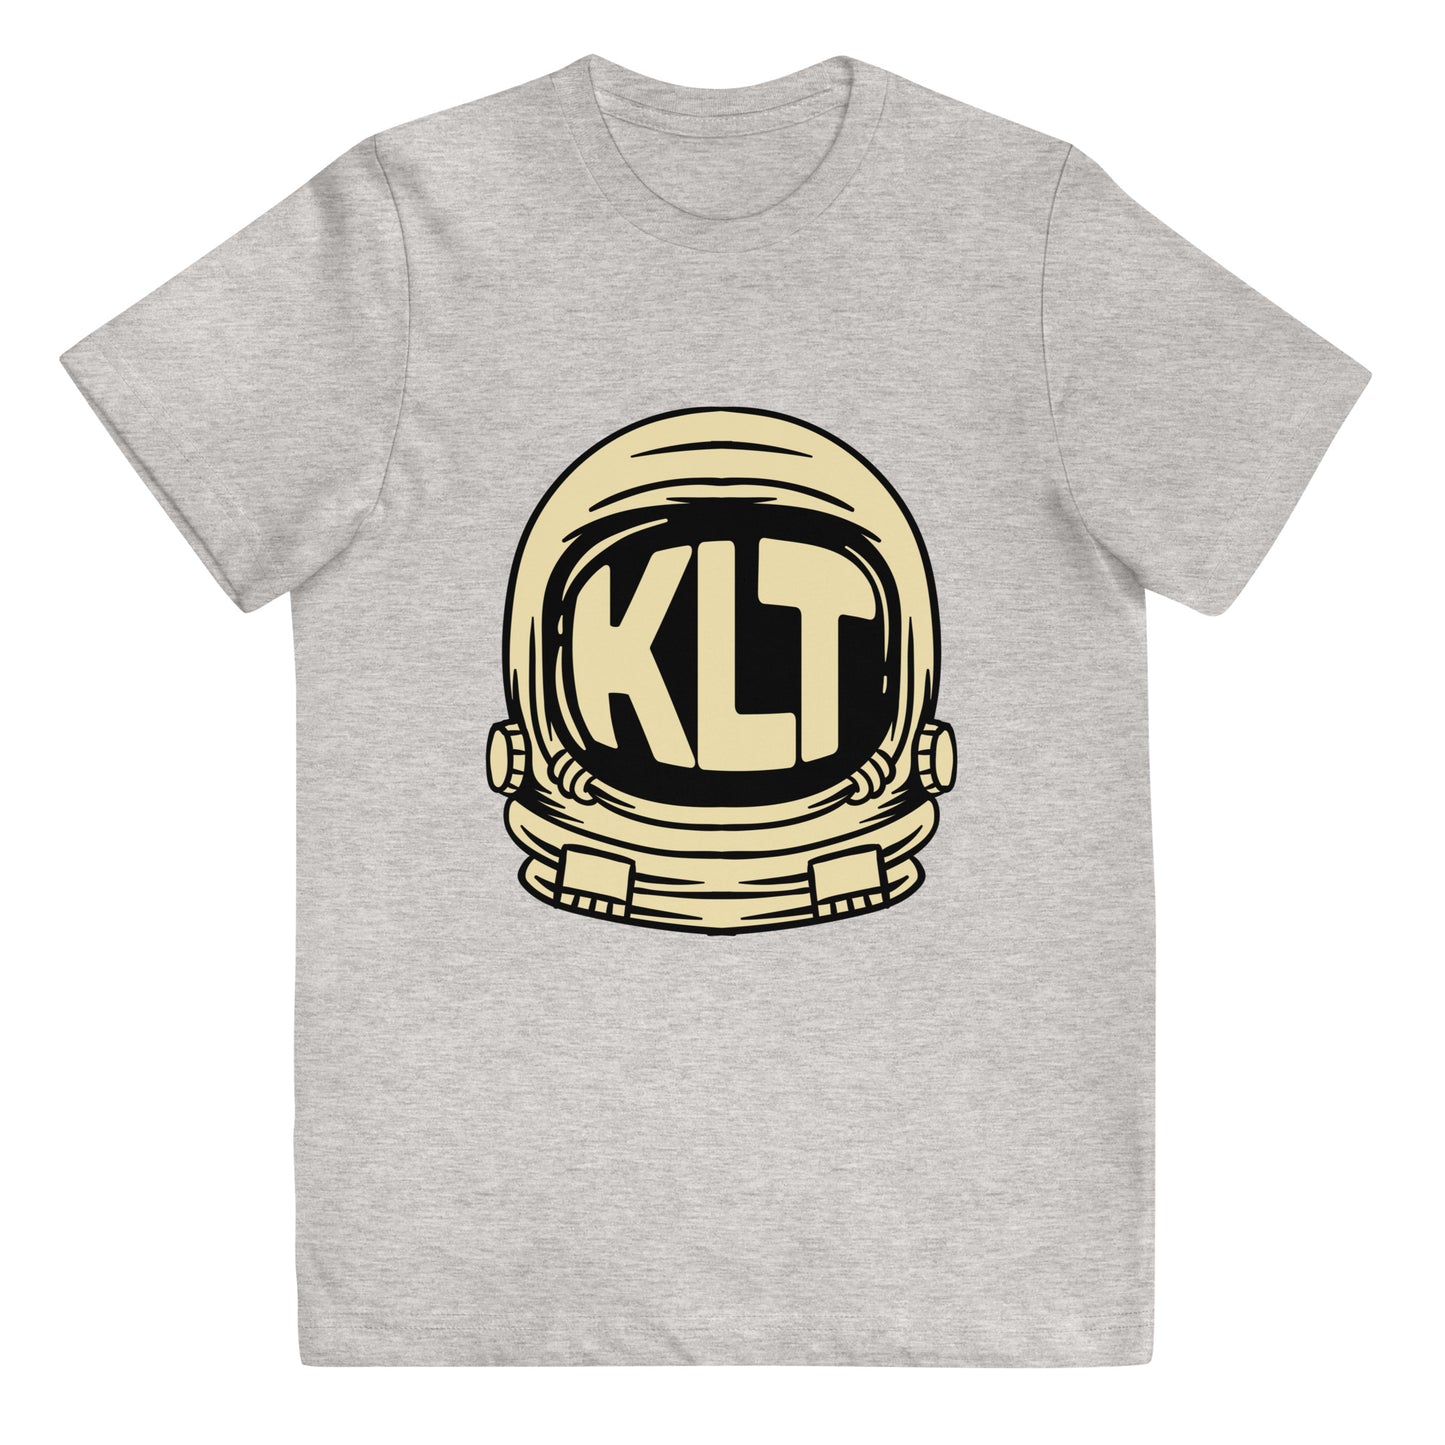 KLT Logo Youth jersey t-shirt